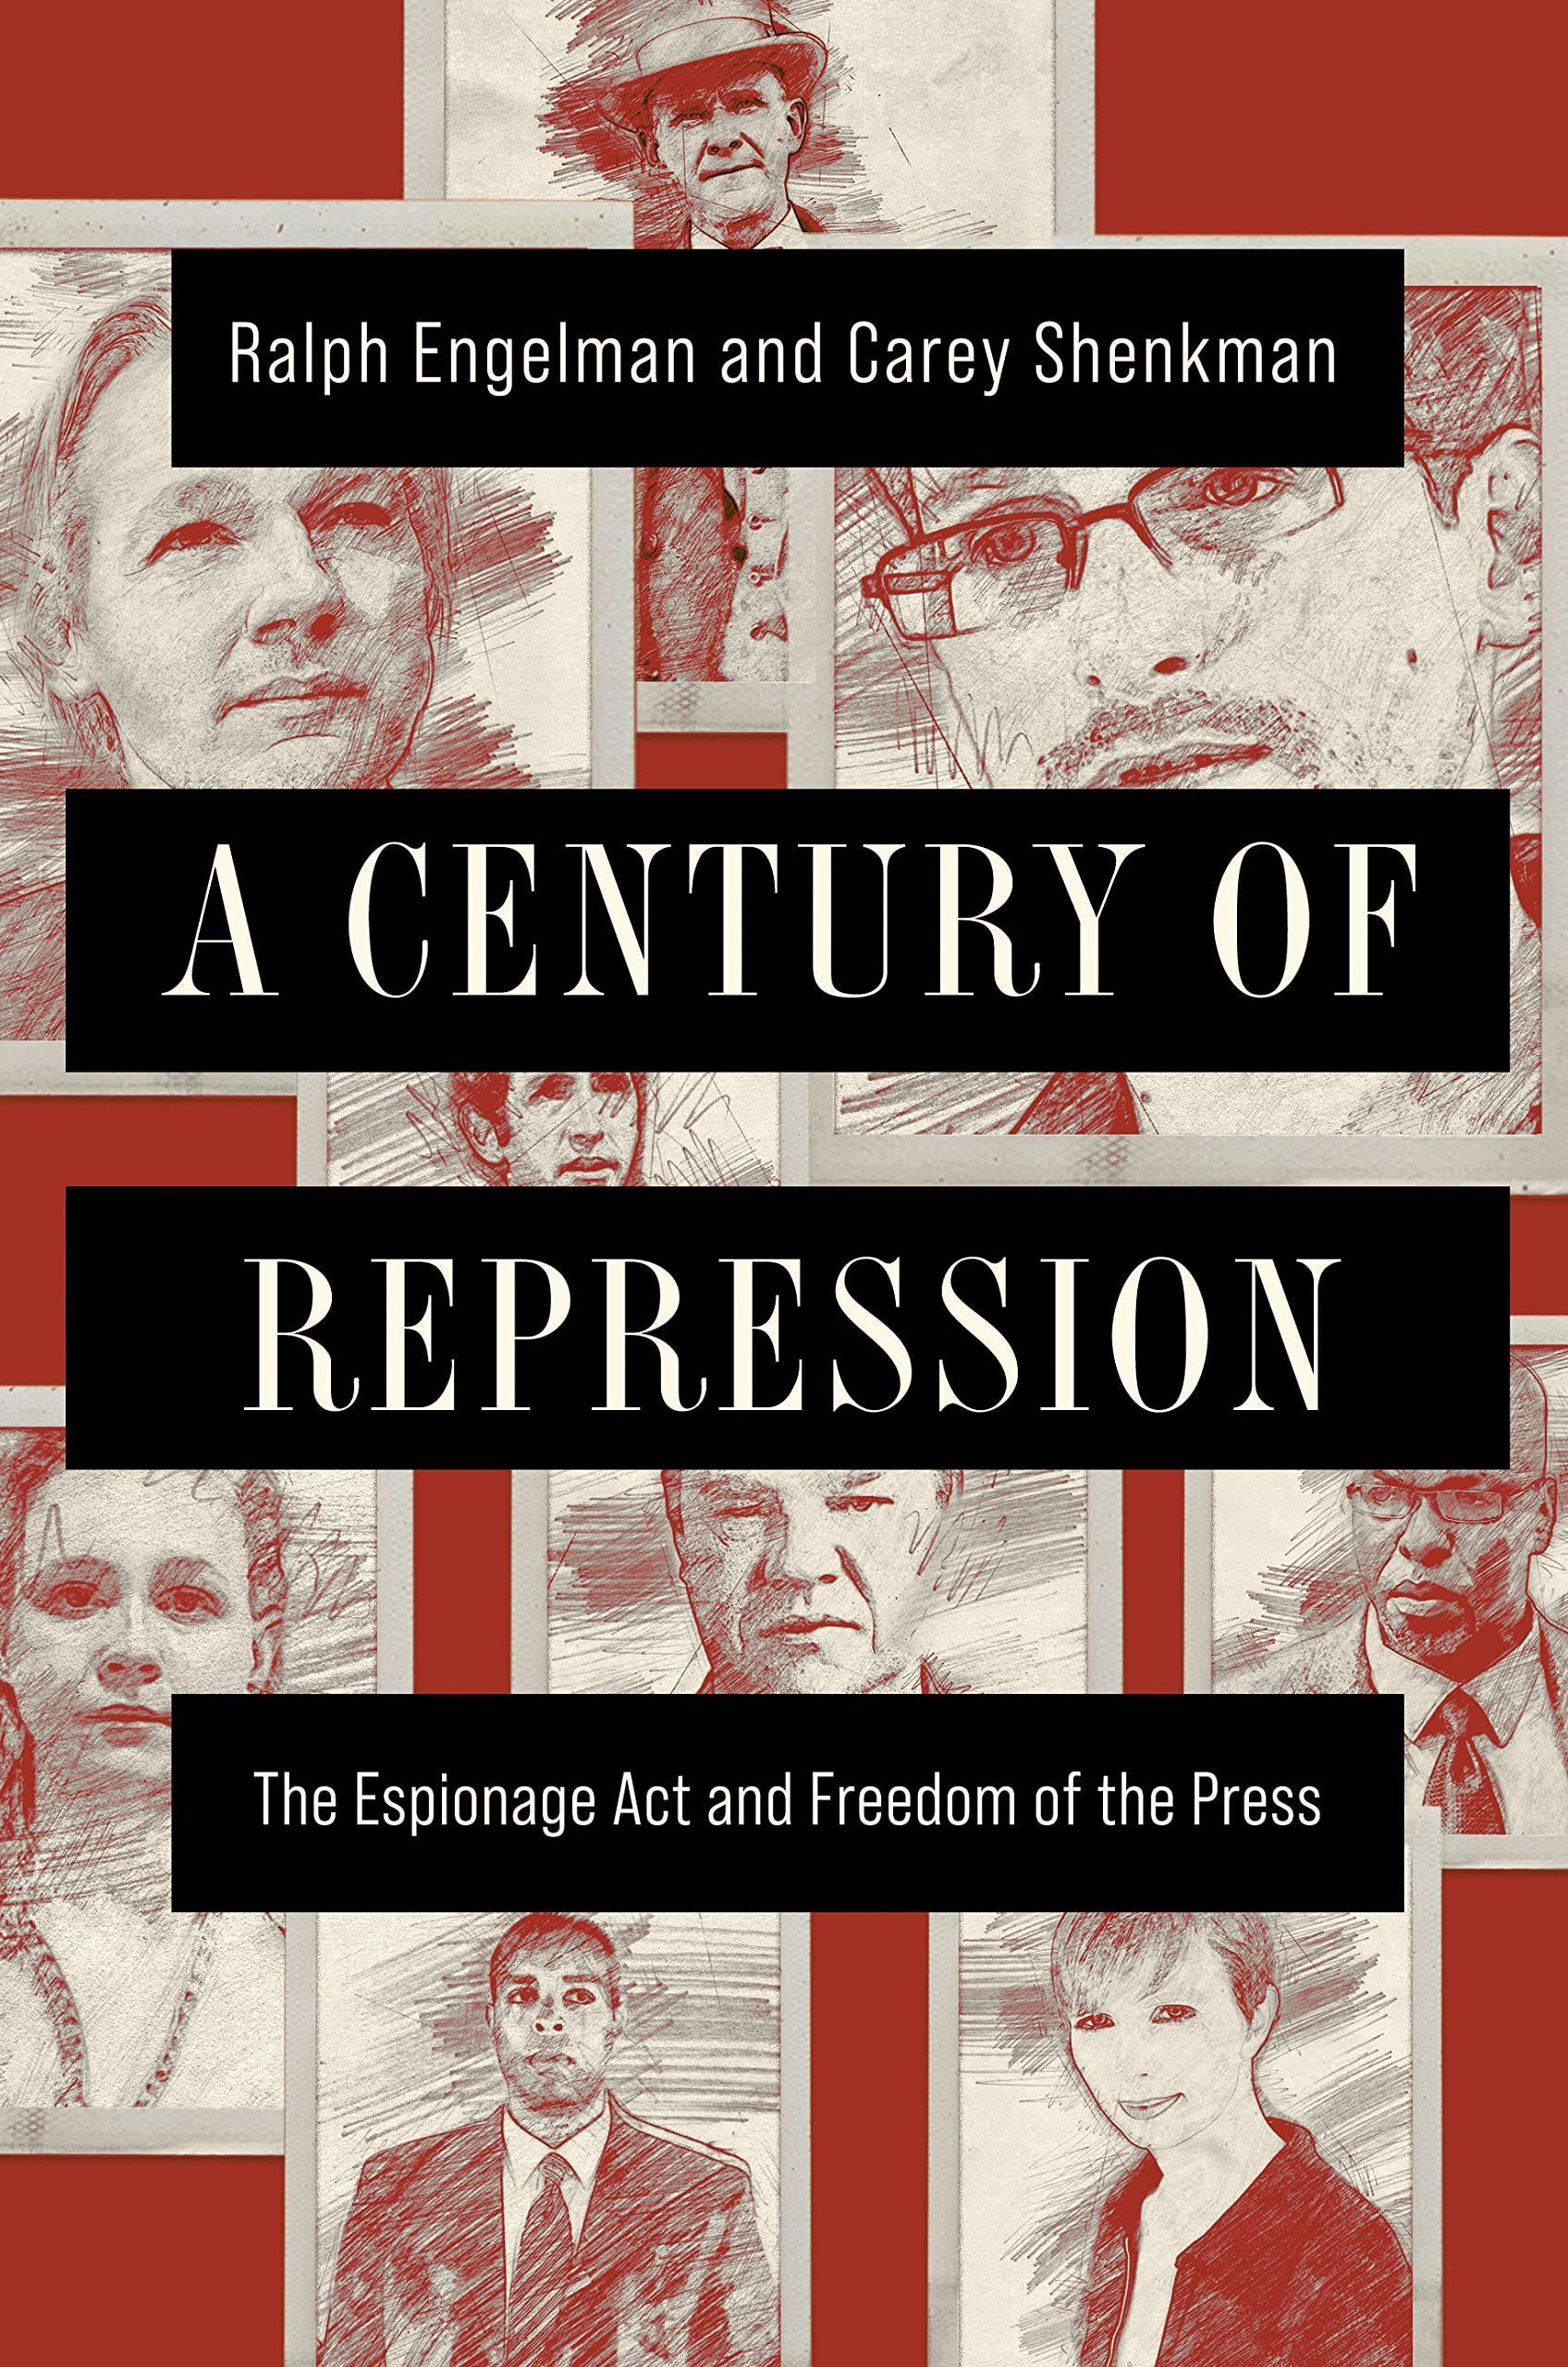 Espionage Overreach: On Ralph Engelman and Carey Shenkman’s “A Century of Repression”